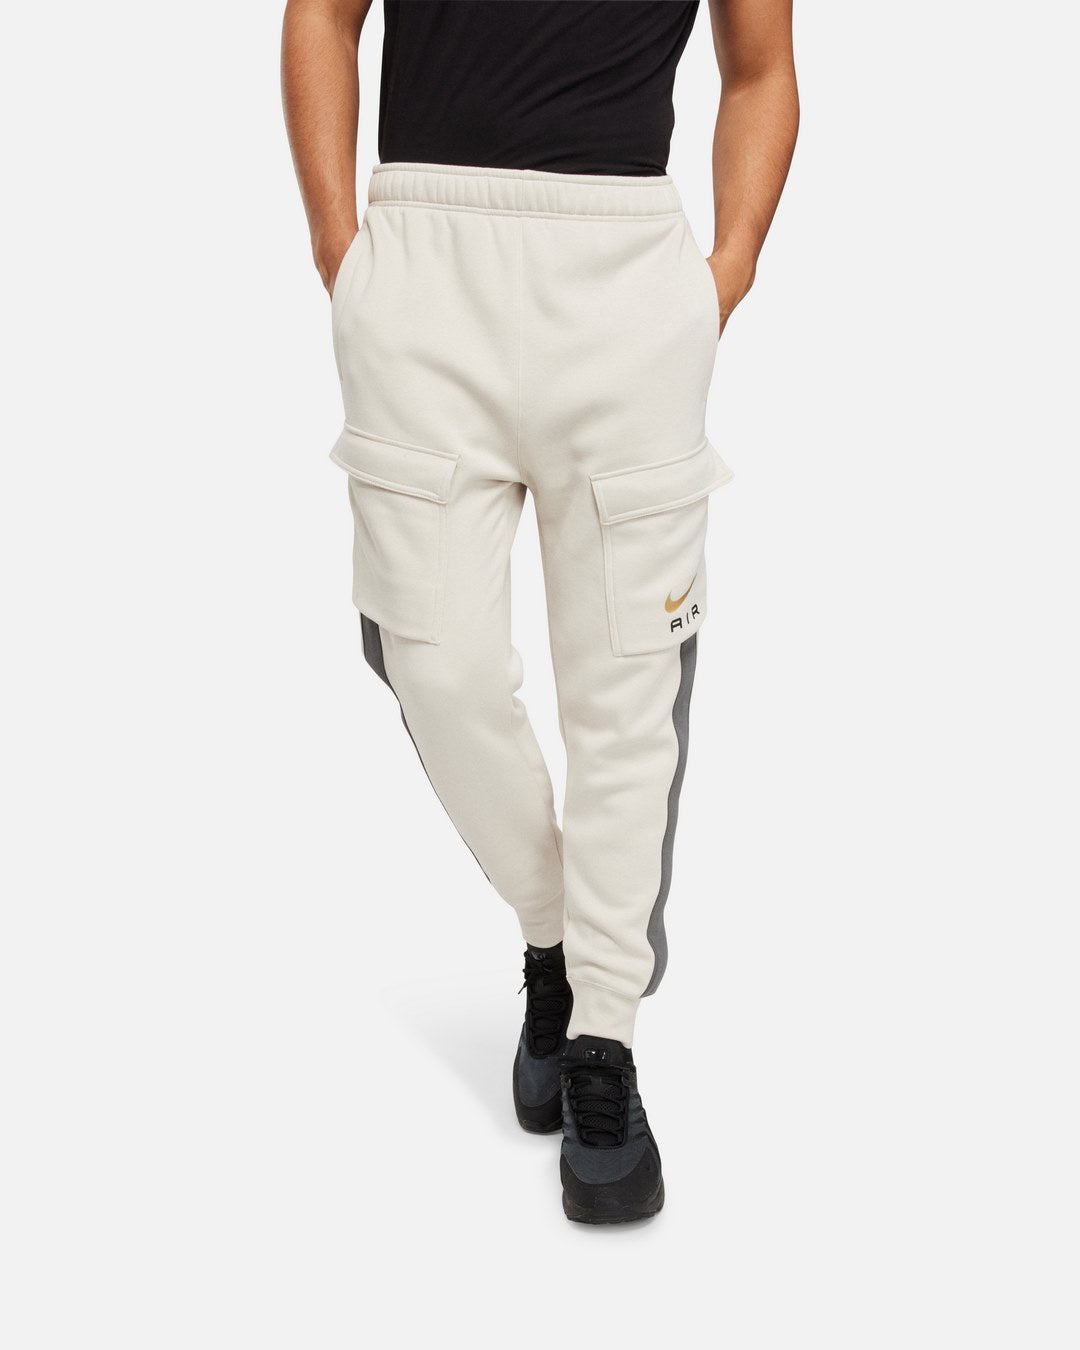 Pantaloni Nike Air - Beige/Oro